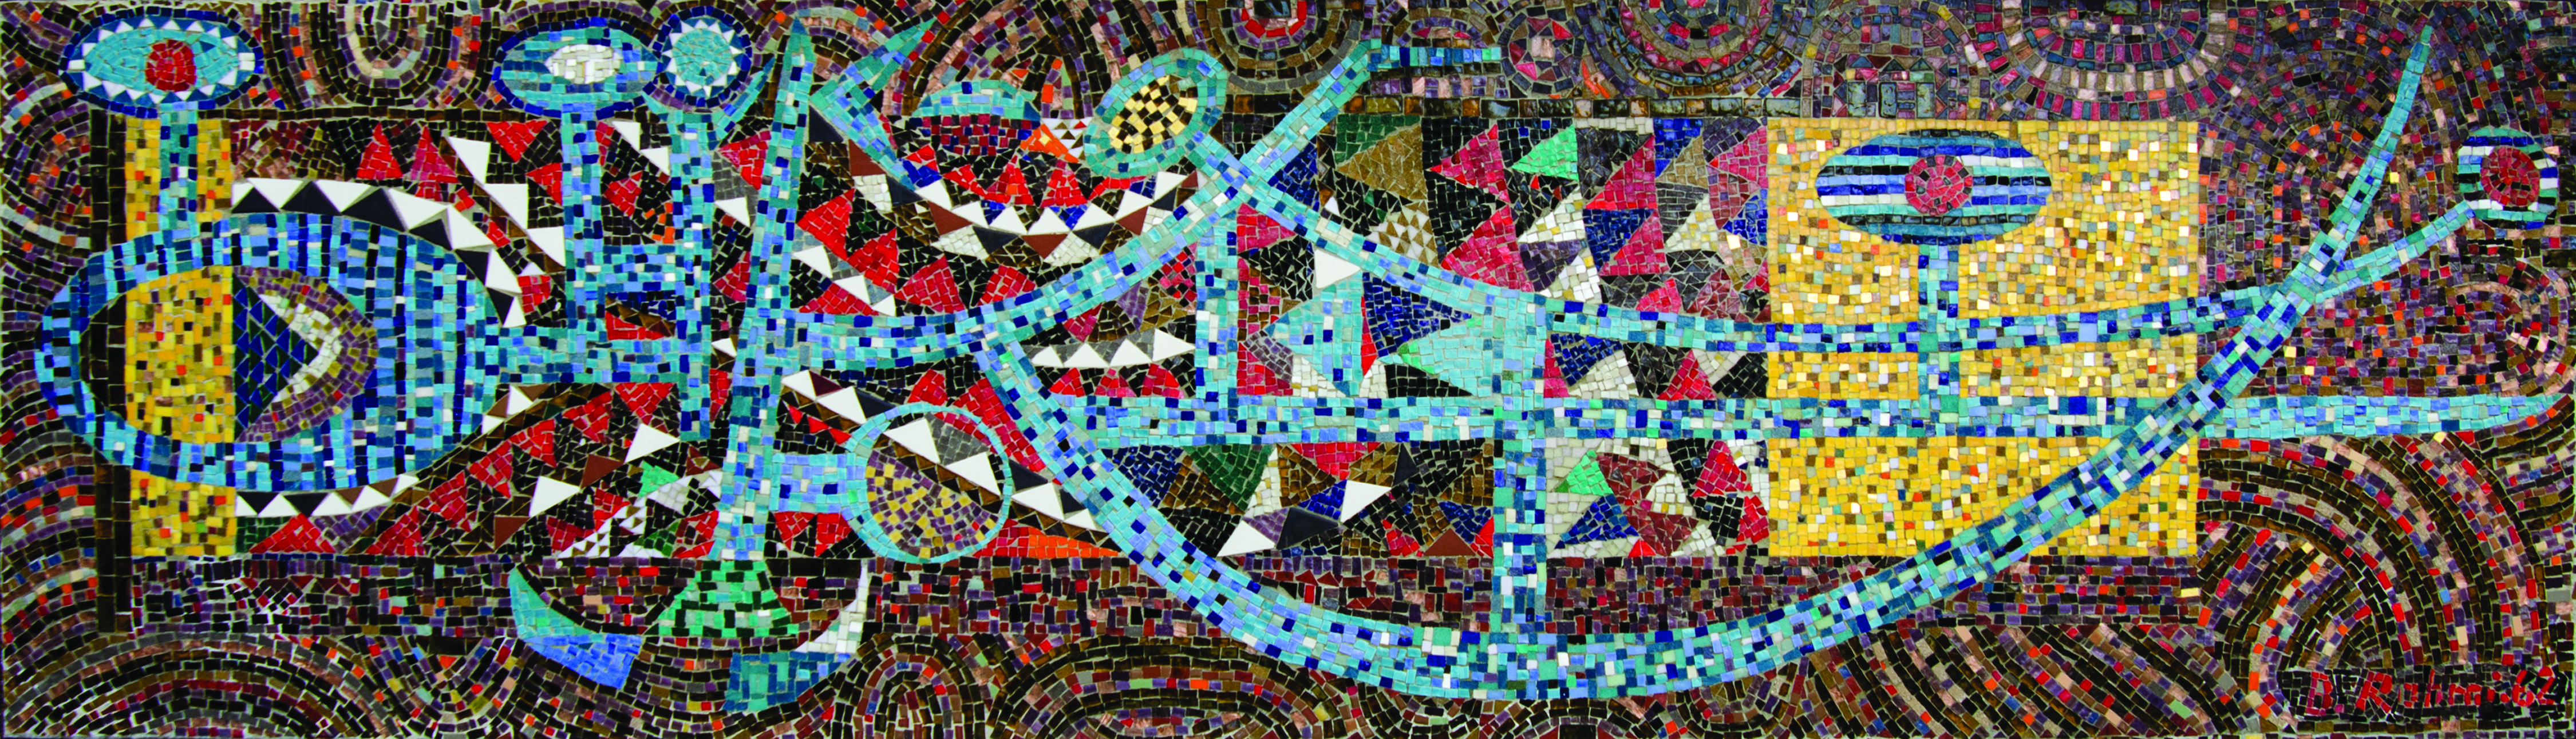 tight image of a mosaic 